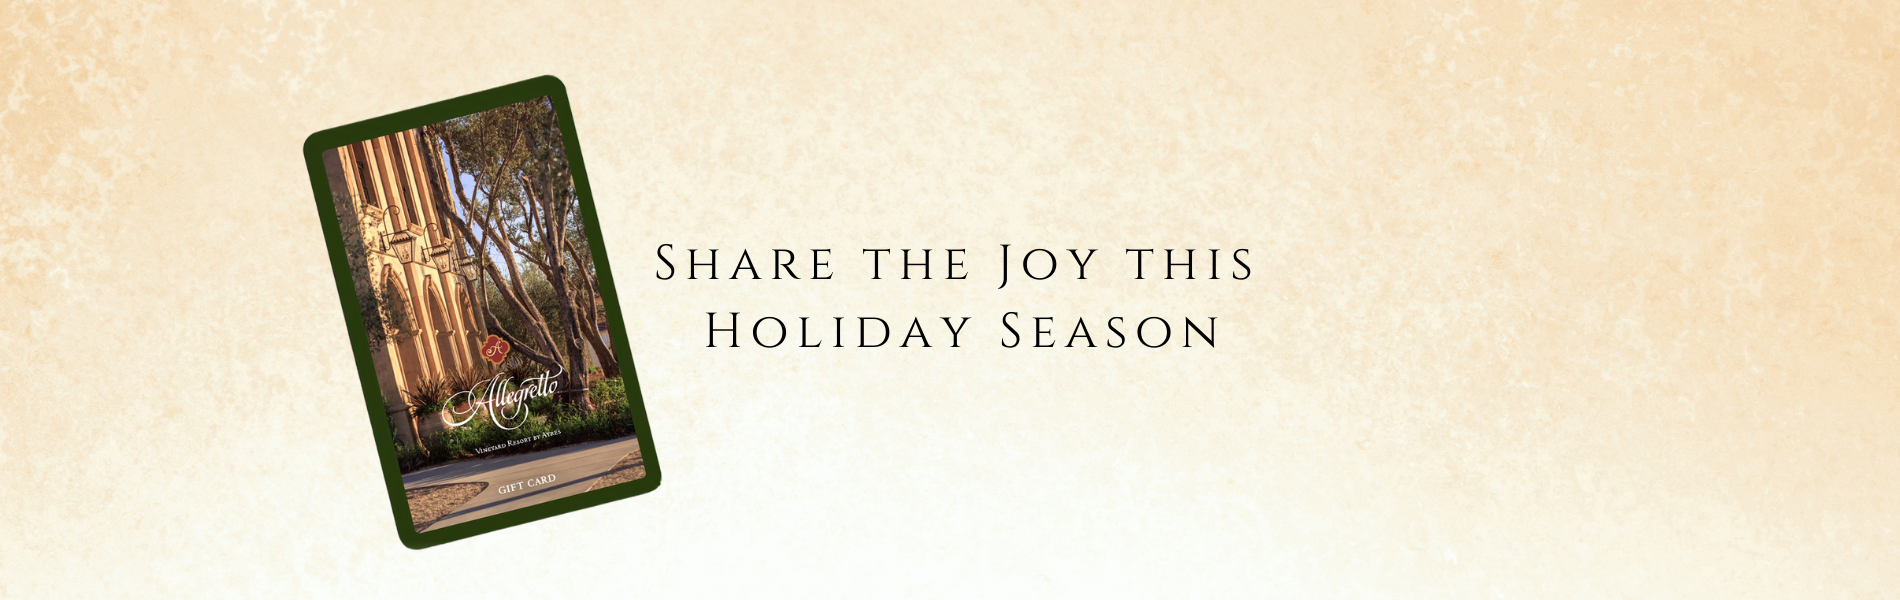 Share the Joy this holiday season. Allegretto Vineyard Resort gift card on beige background